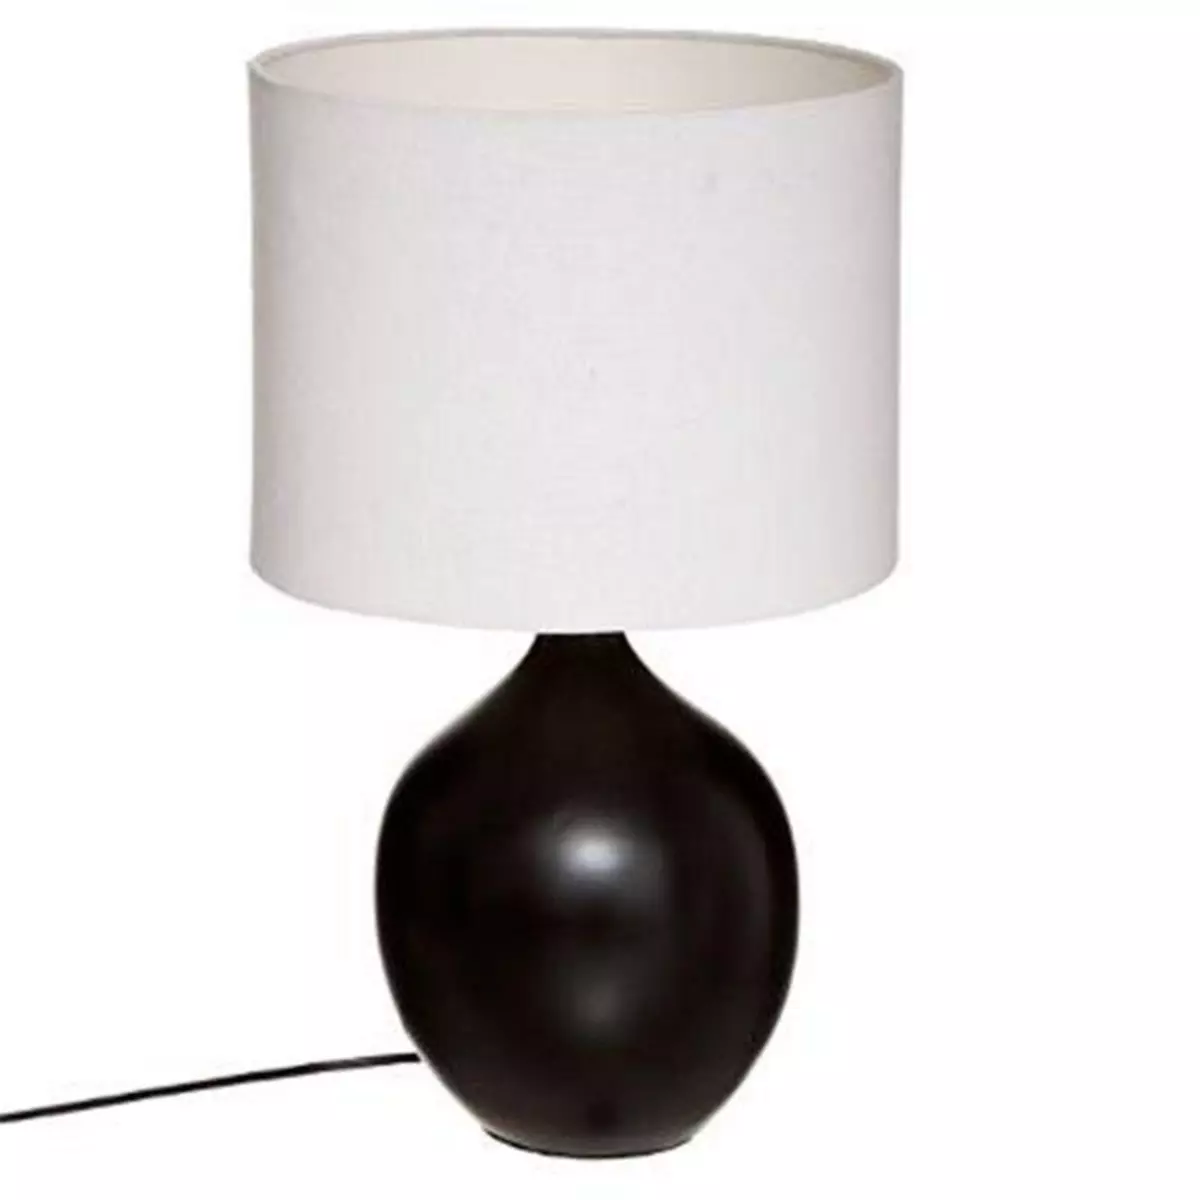  Lampe à Poser Design  Maja  51cm Noir & Blanc